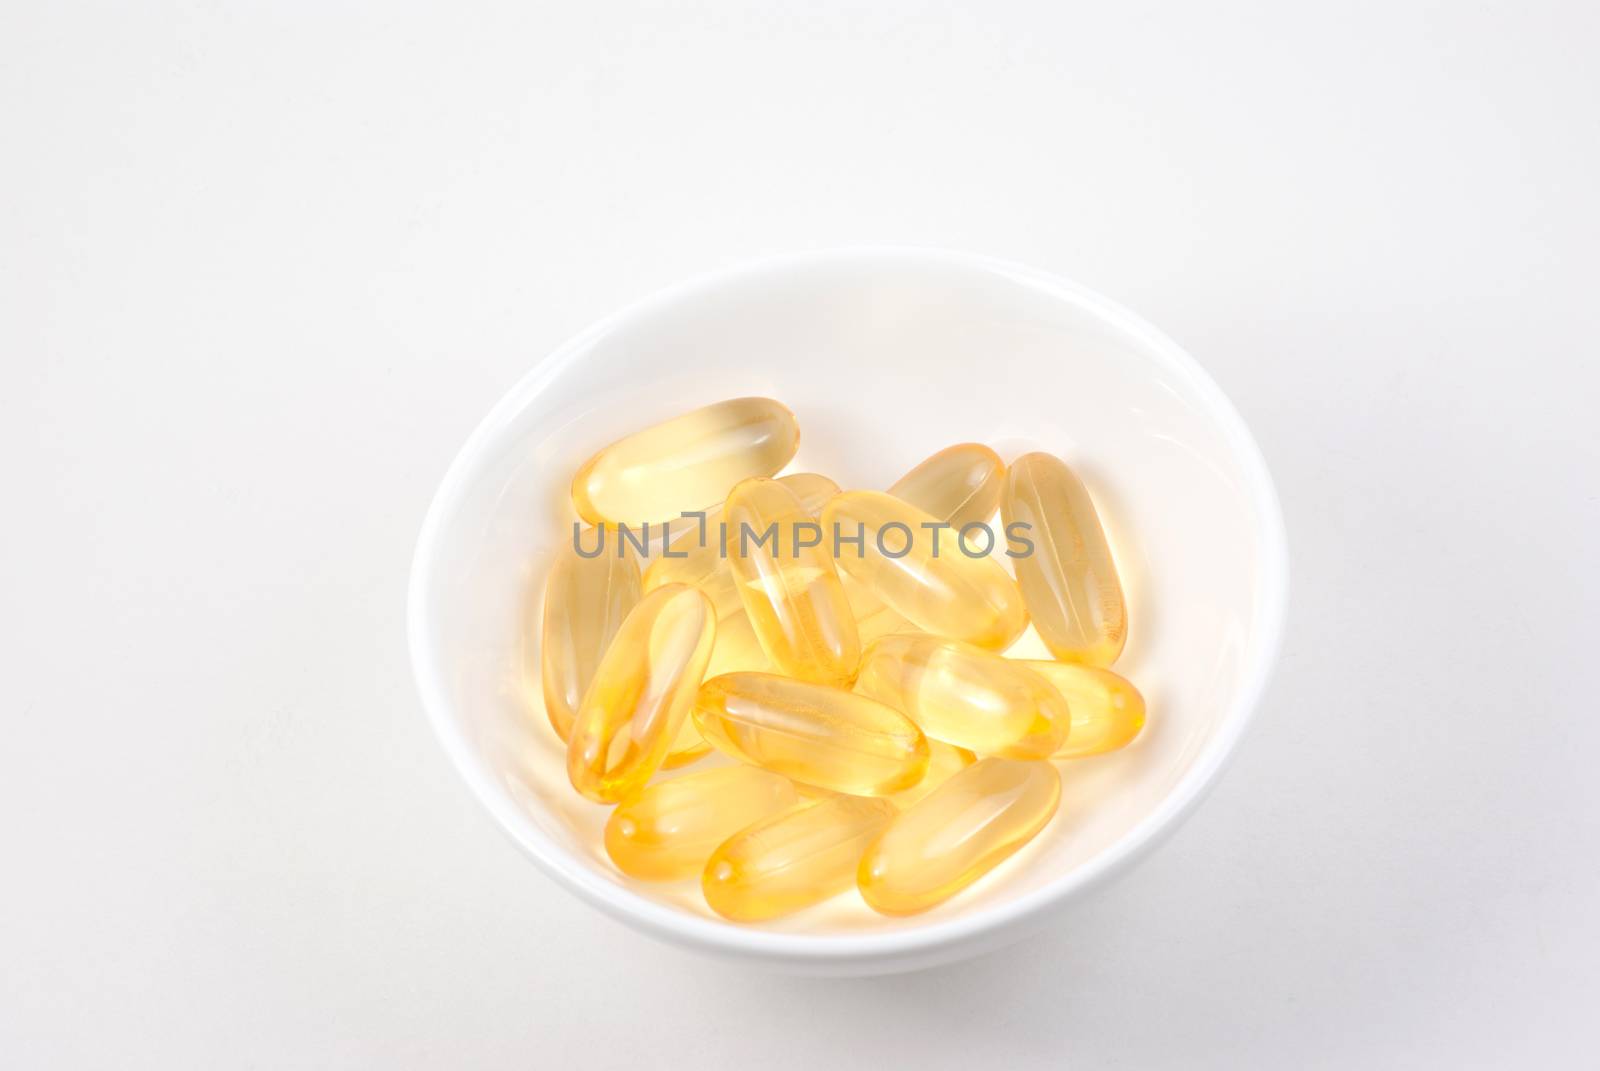 Fish oil capsules in a small dish